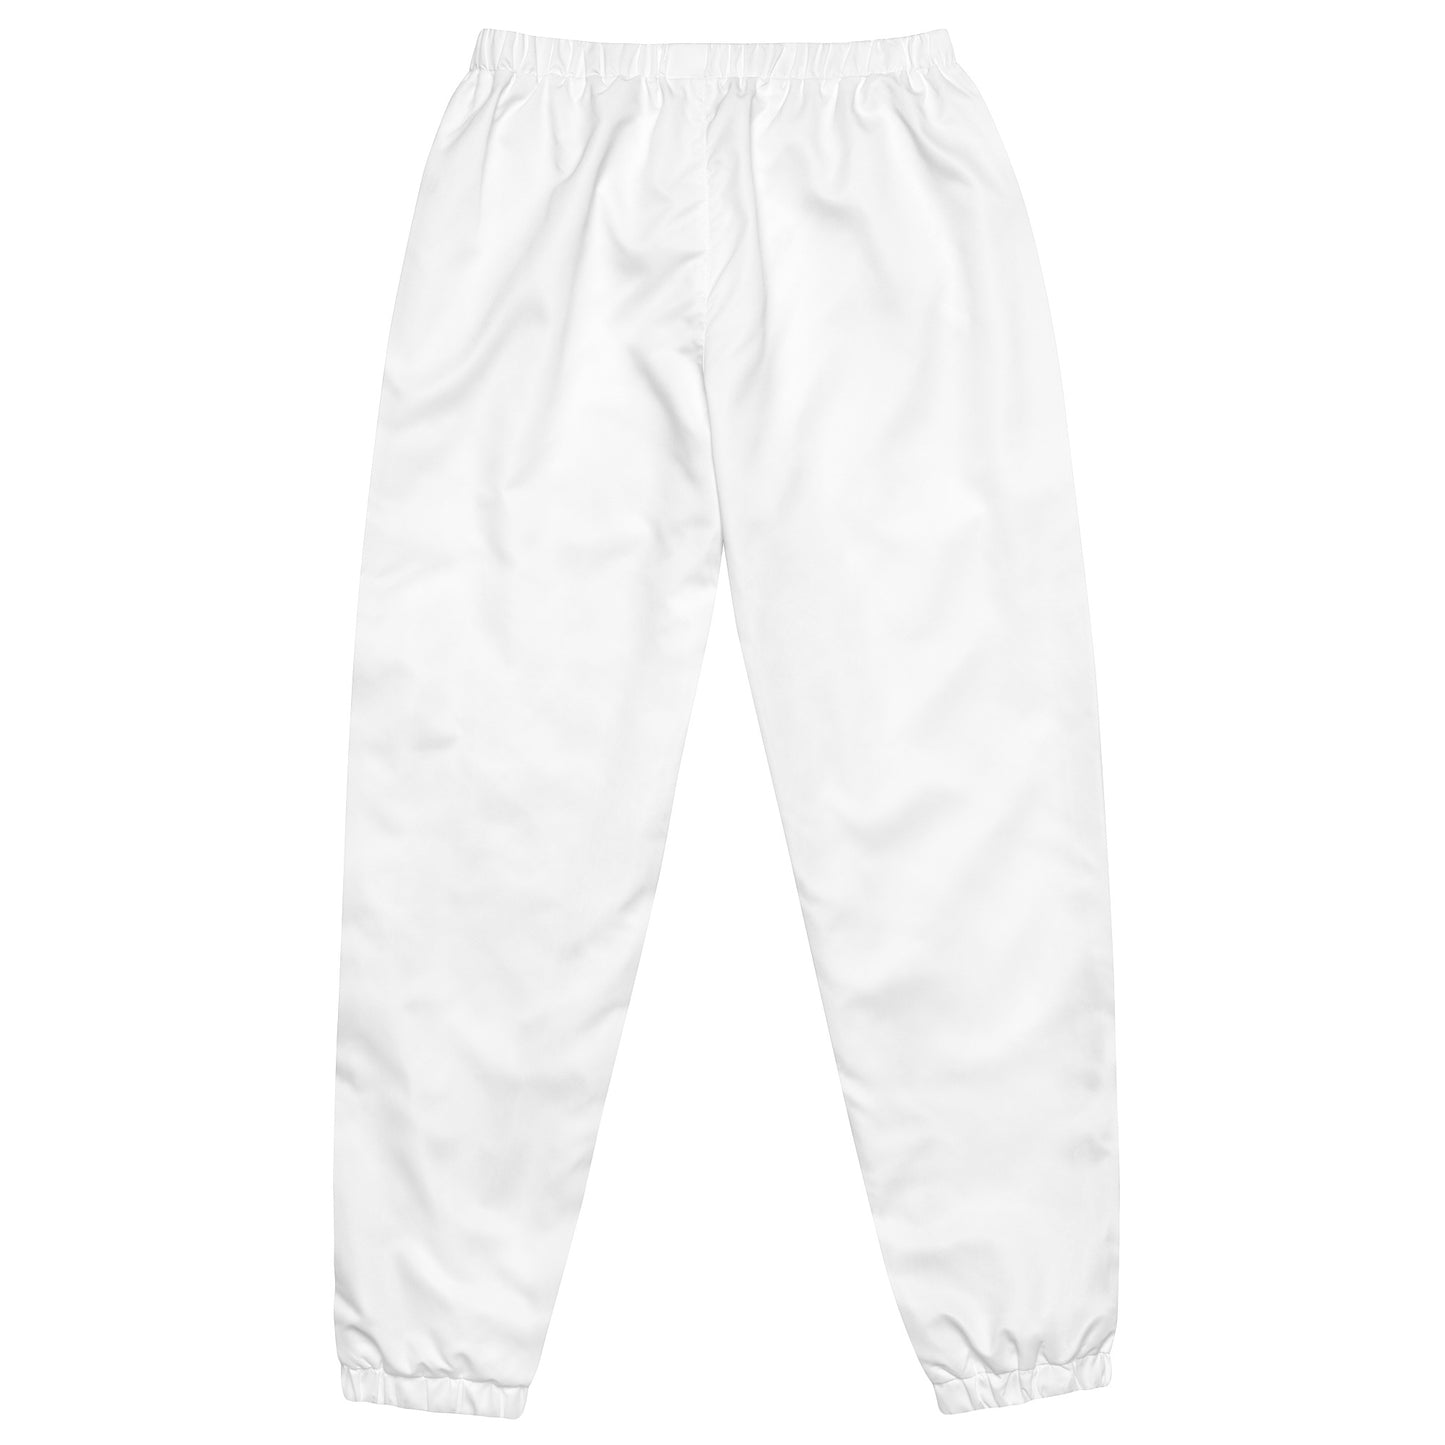 FN UNAMERICAN UNISEX: LAX Track Pants (white/eclipse)